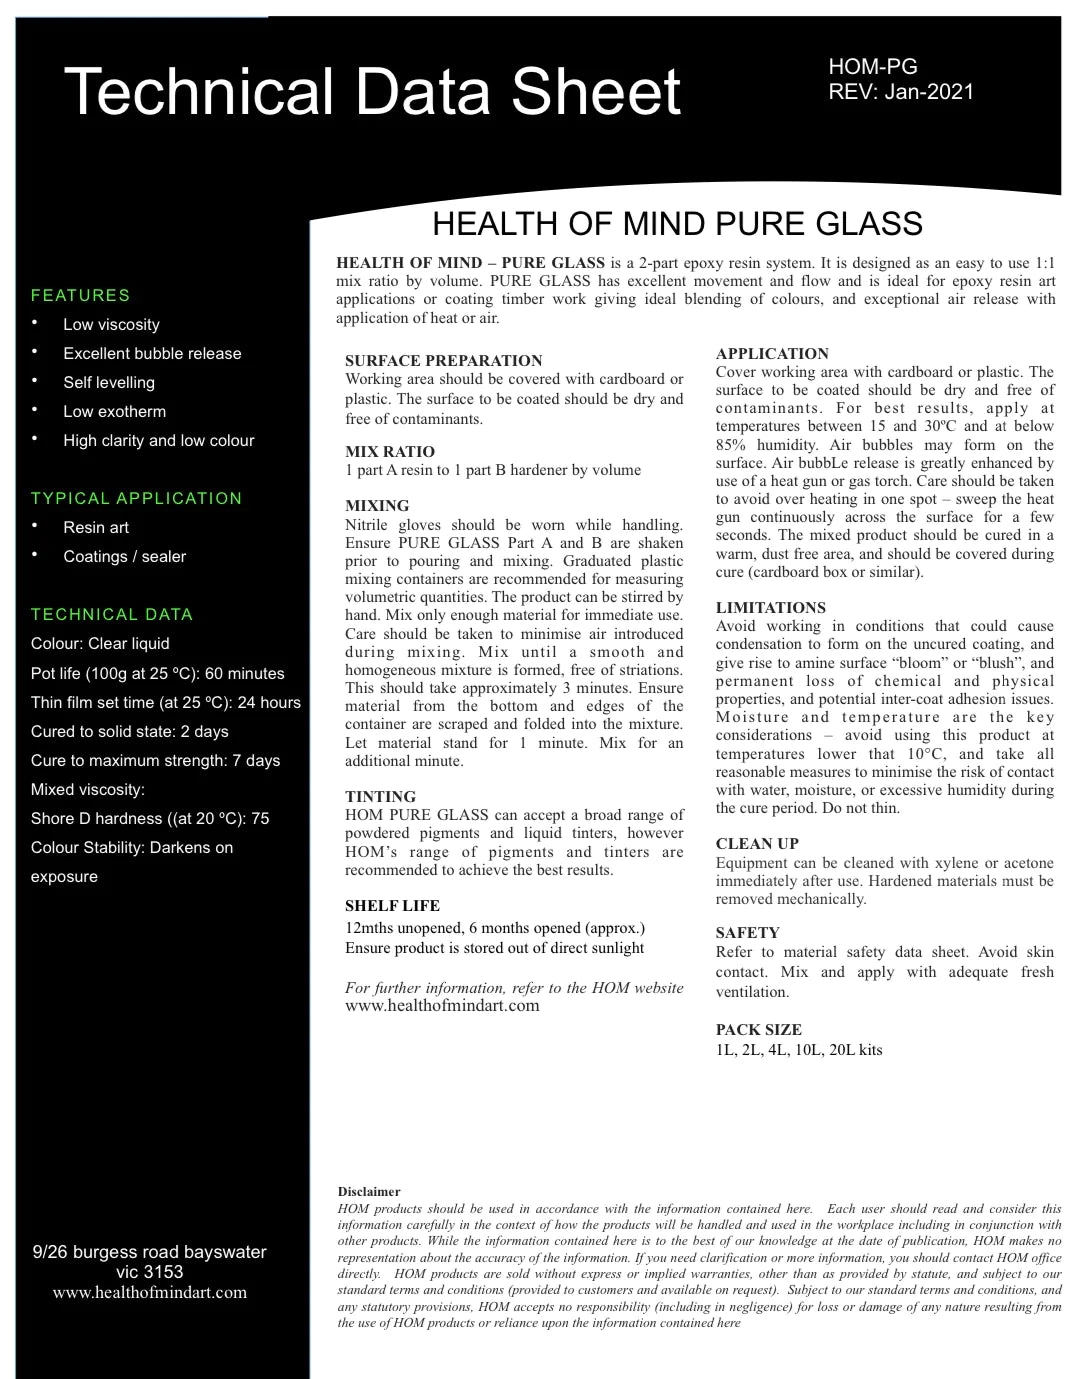 Pure Glass Resin Art & Coatings - Health Of Mind Art